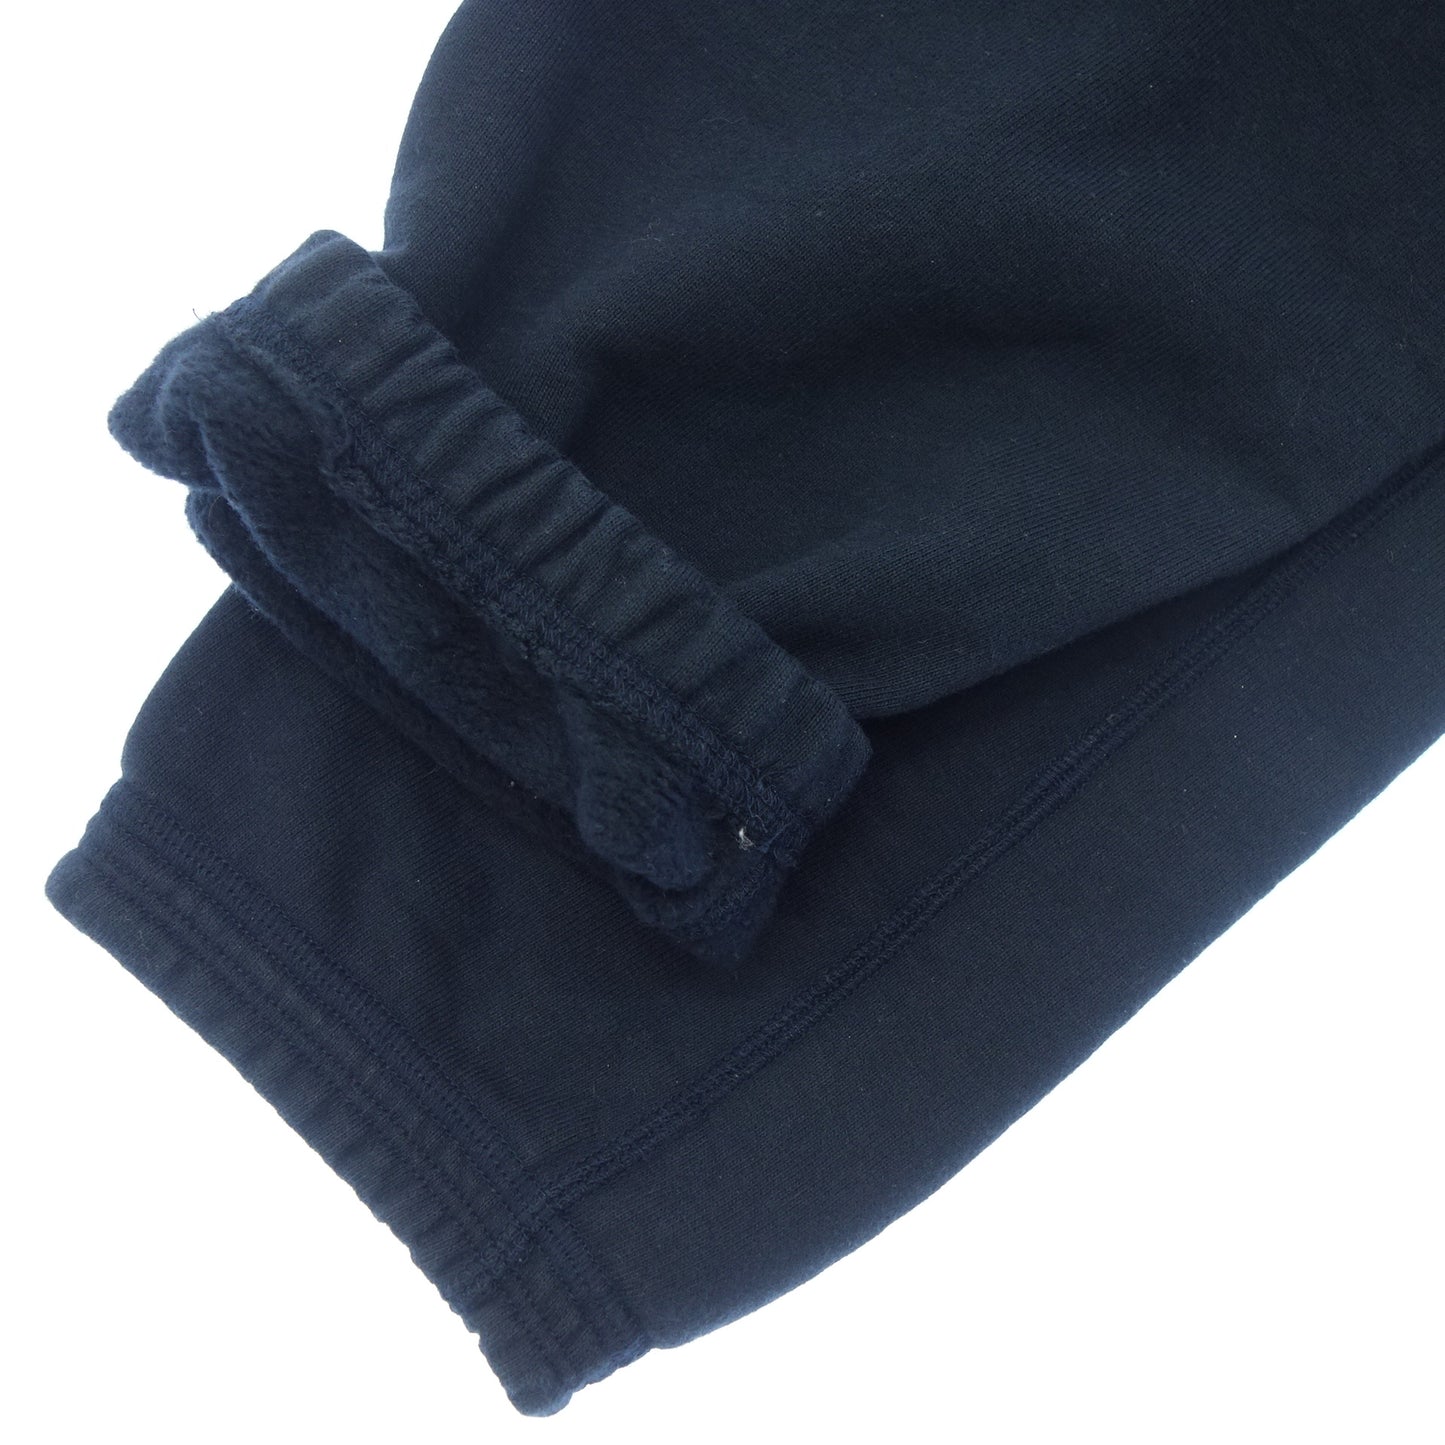 Good condition◆Non-native rib sweat pants DWELLER EASY RIB PANTS COTTON SWEAT Cotton Navy Size: 2 NN-P4035 Men's nonnative [AFB2] 